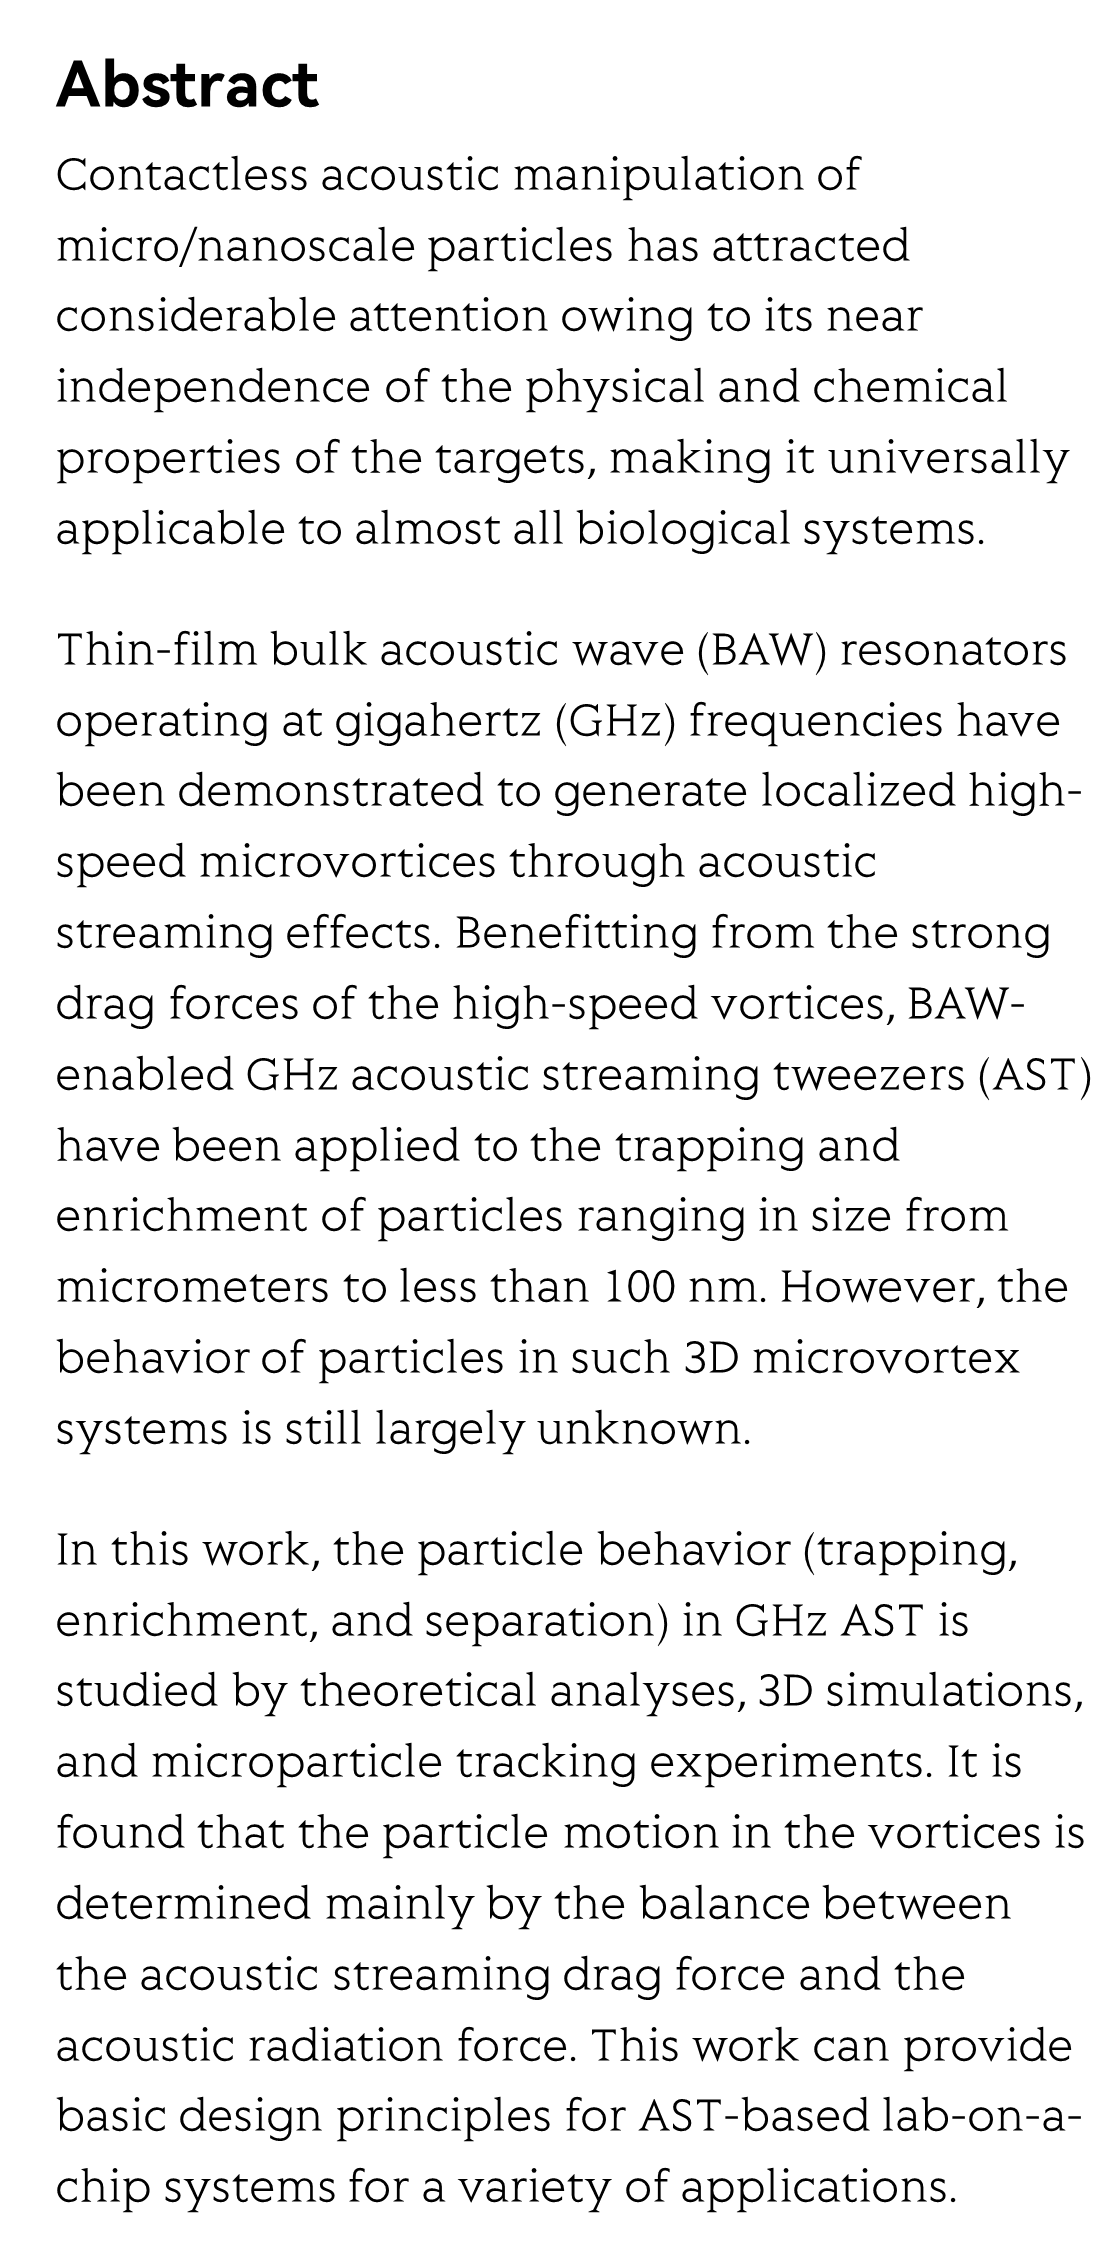 Manipulations of micro/nanoparticles using gigahertz acoustic streaming tweezers_2